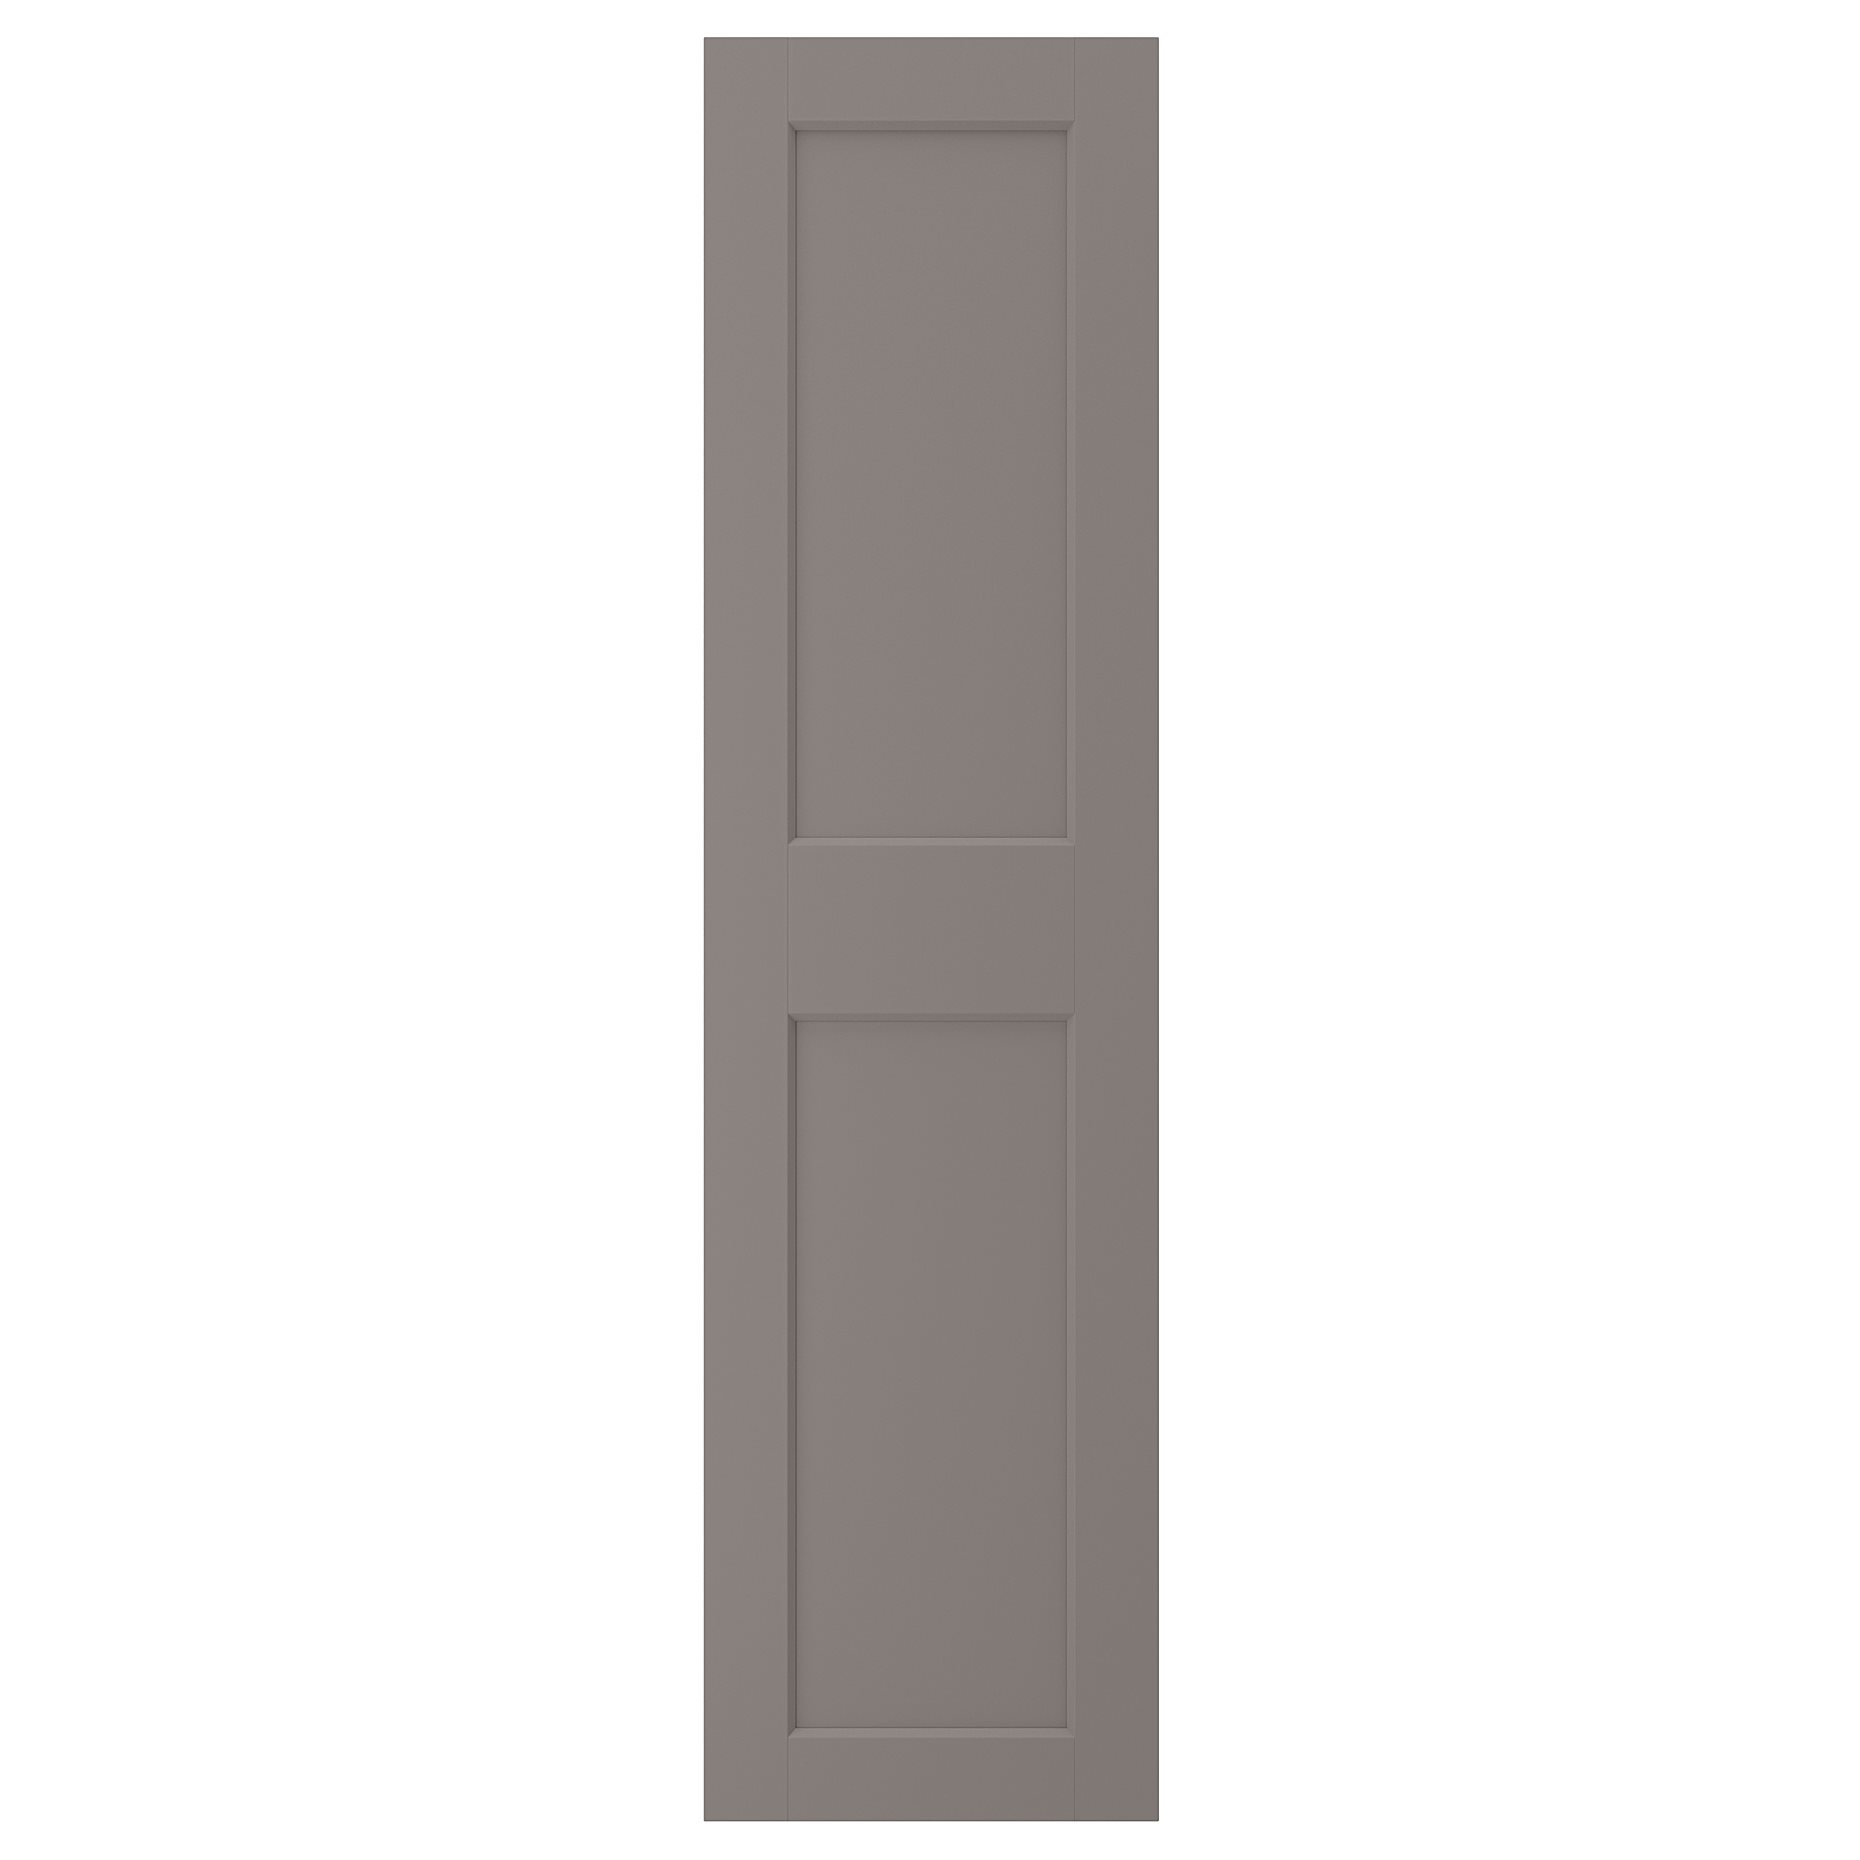 GRIMO, πόρτα με μεντεσέδες, 50x195 cm, 593.321.92